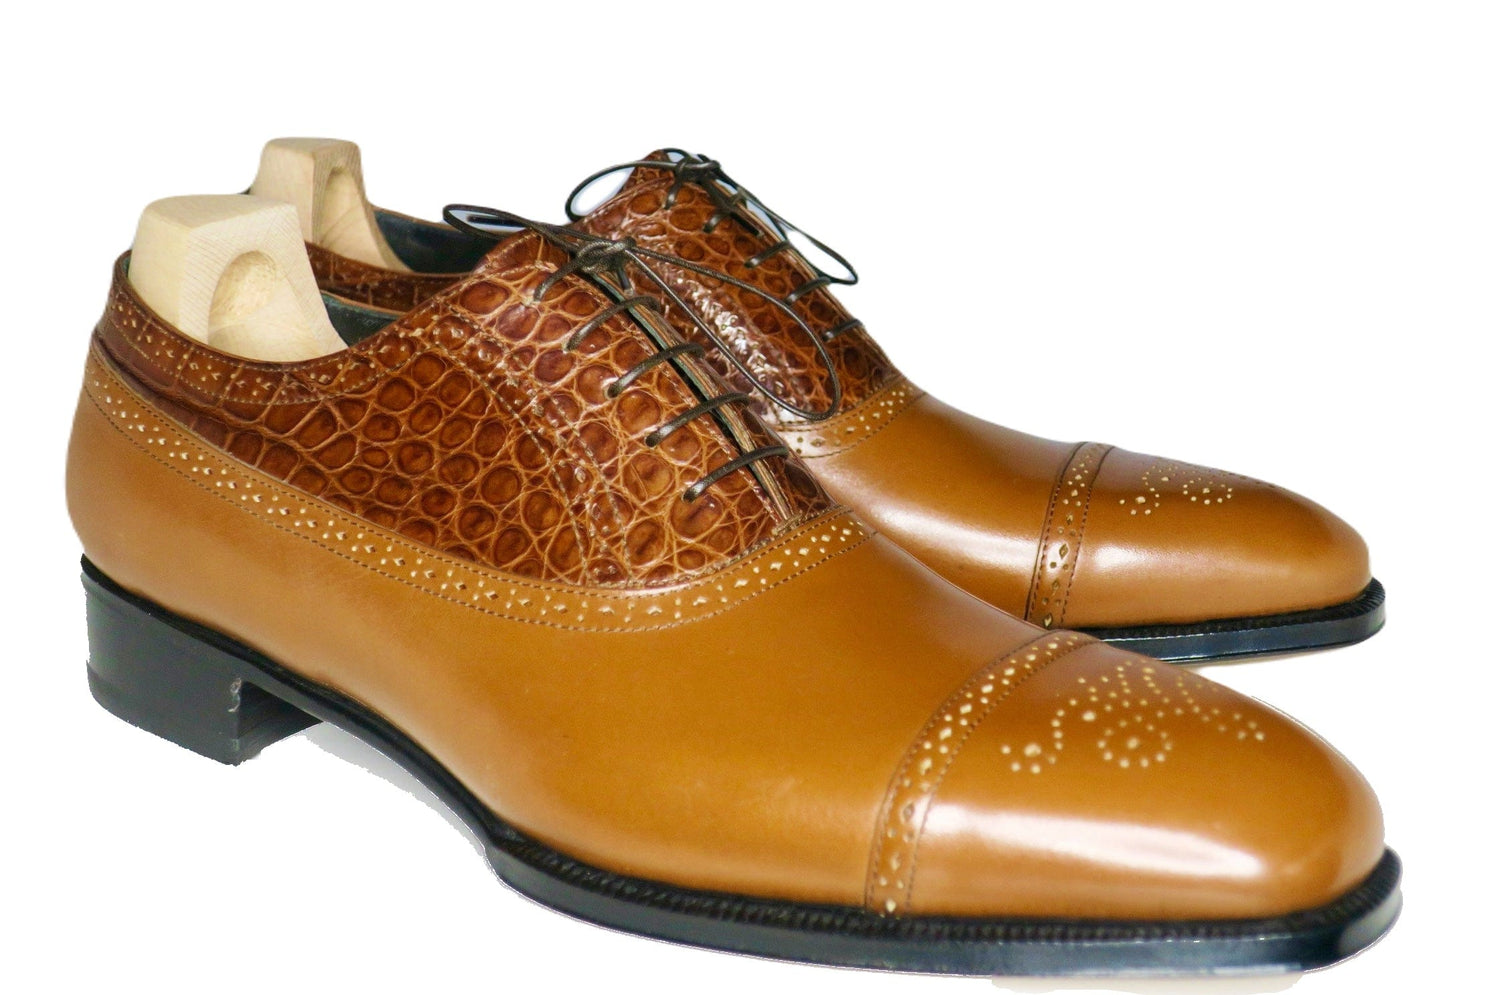 Maison Koly Le Bourget Oxfords Brown Vitello Box Calf and Alligator - maisonkoly.com 5 Shoes